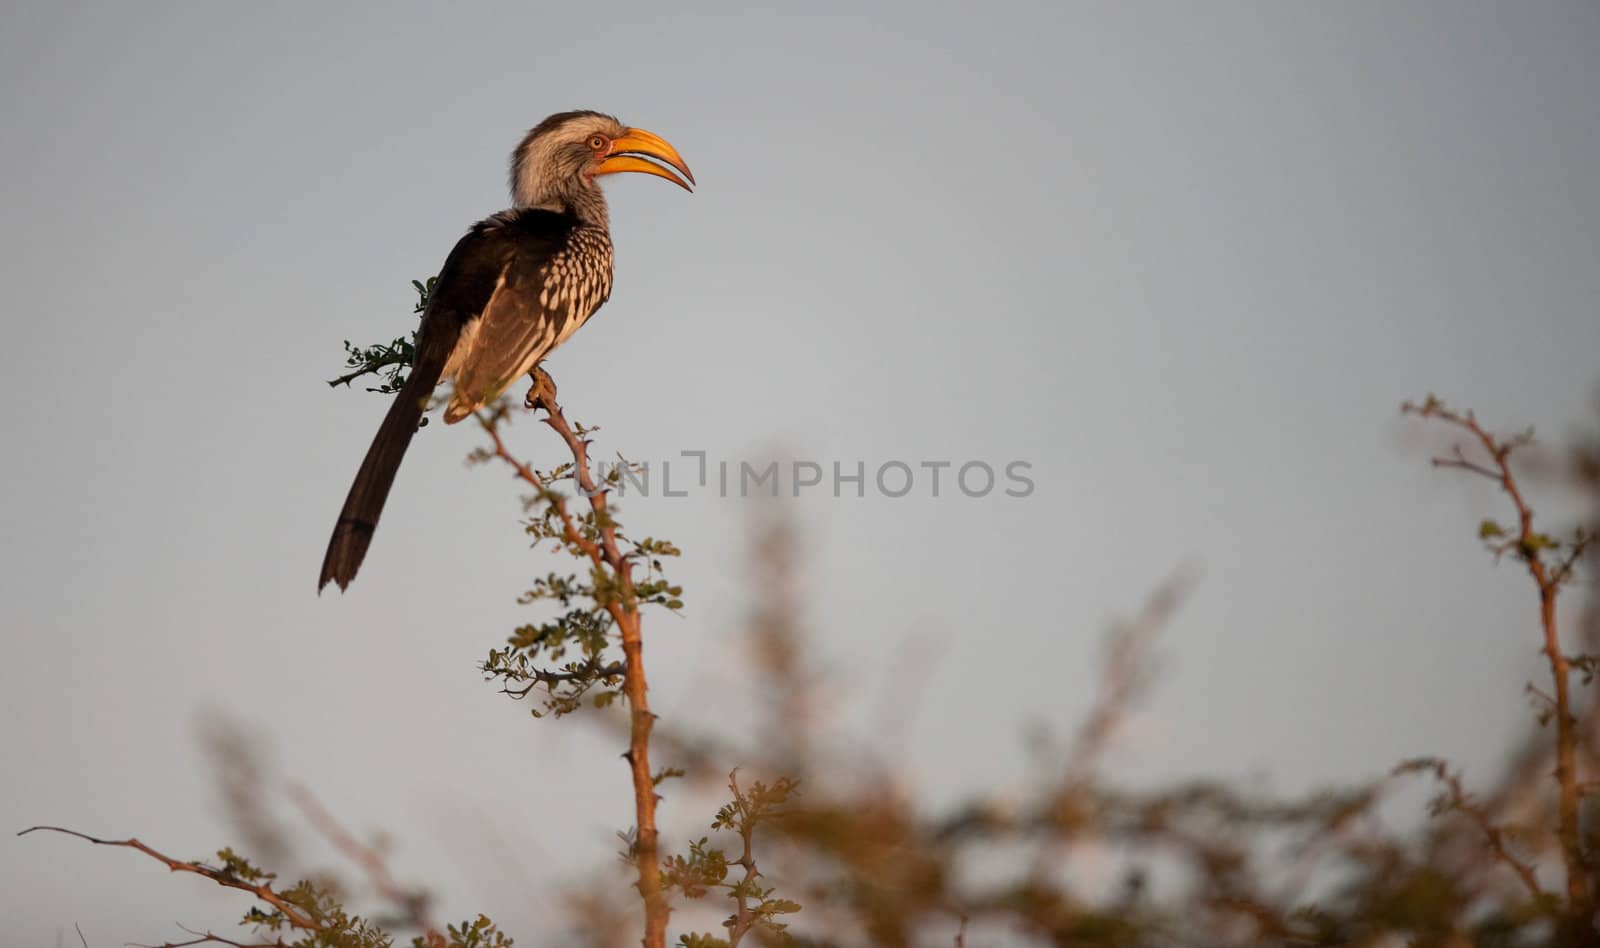 Southern Yellowbilled Hornbill (Tocus leucomelas), Hoedspruit, South Africa